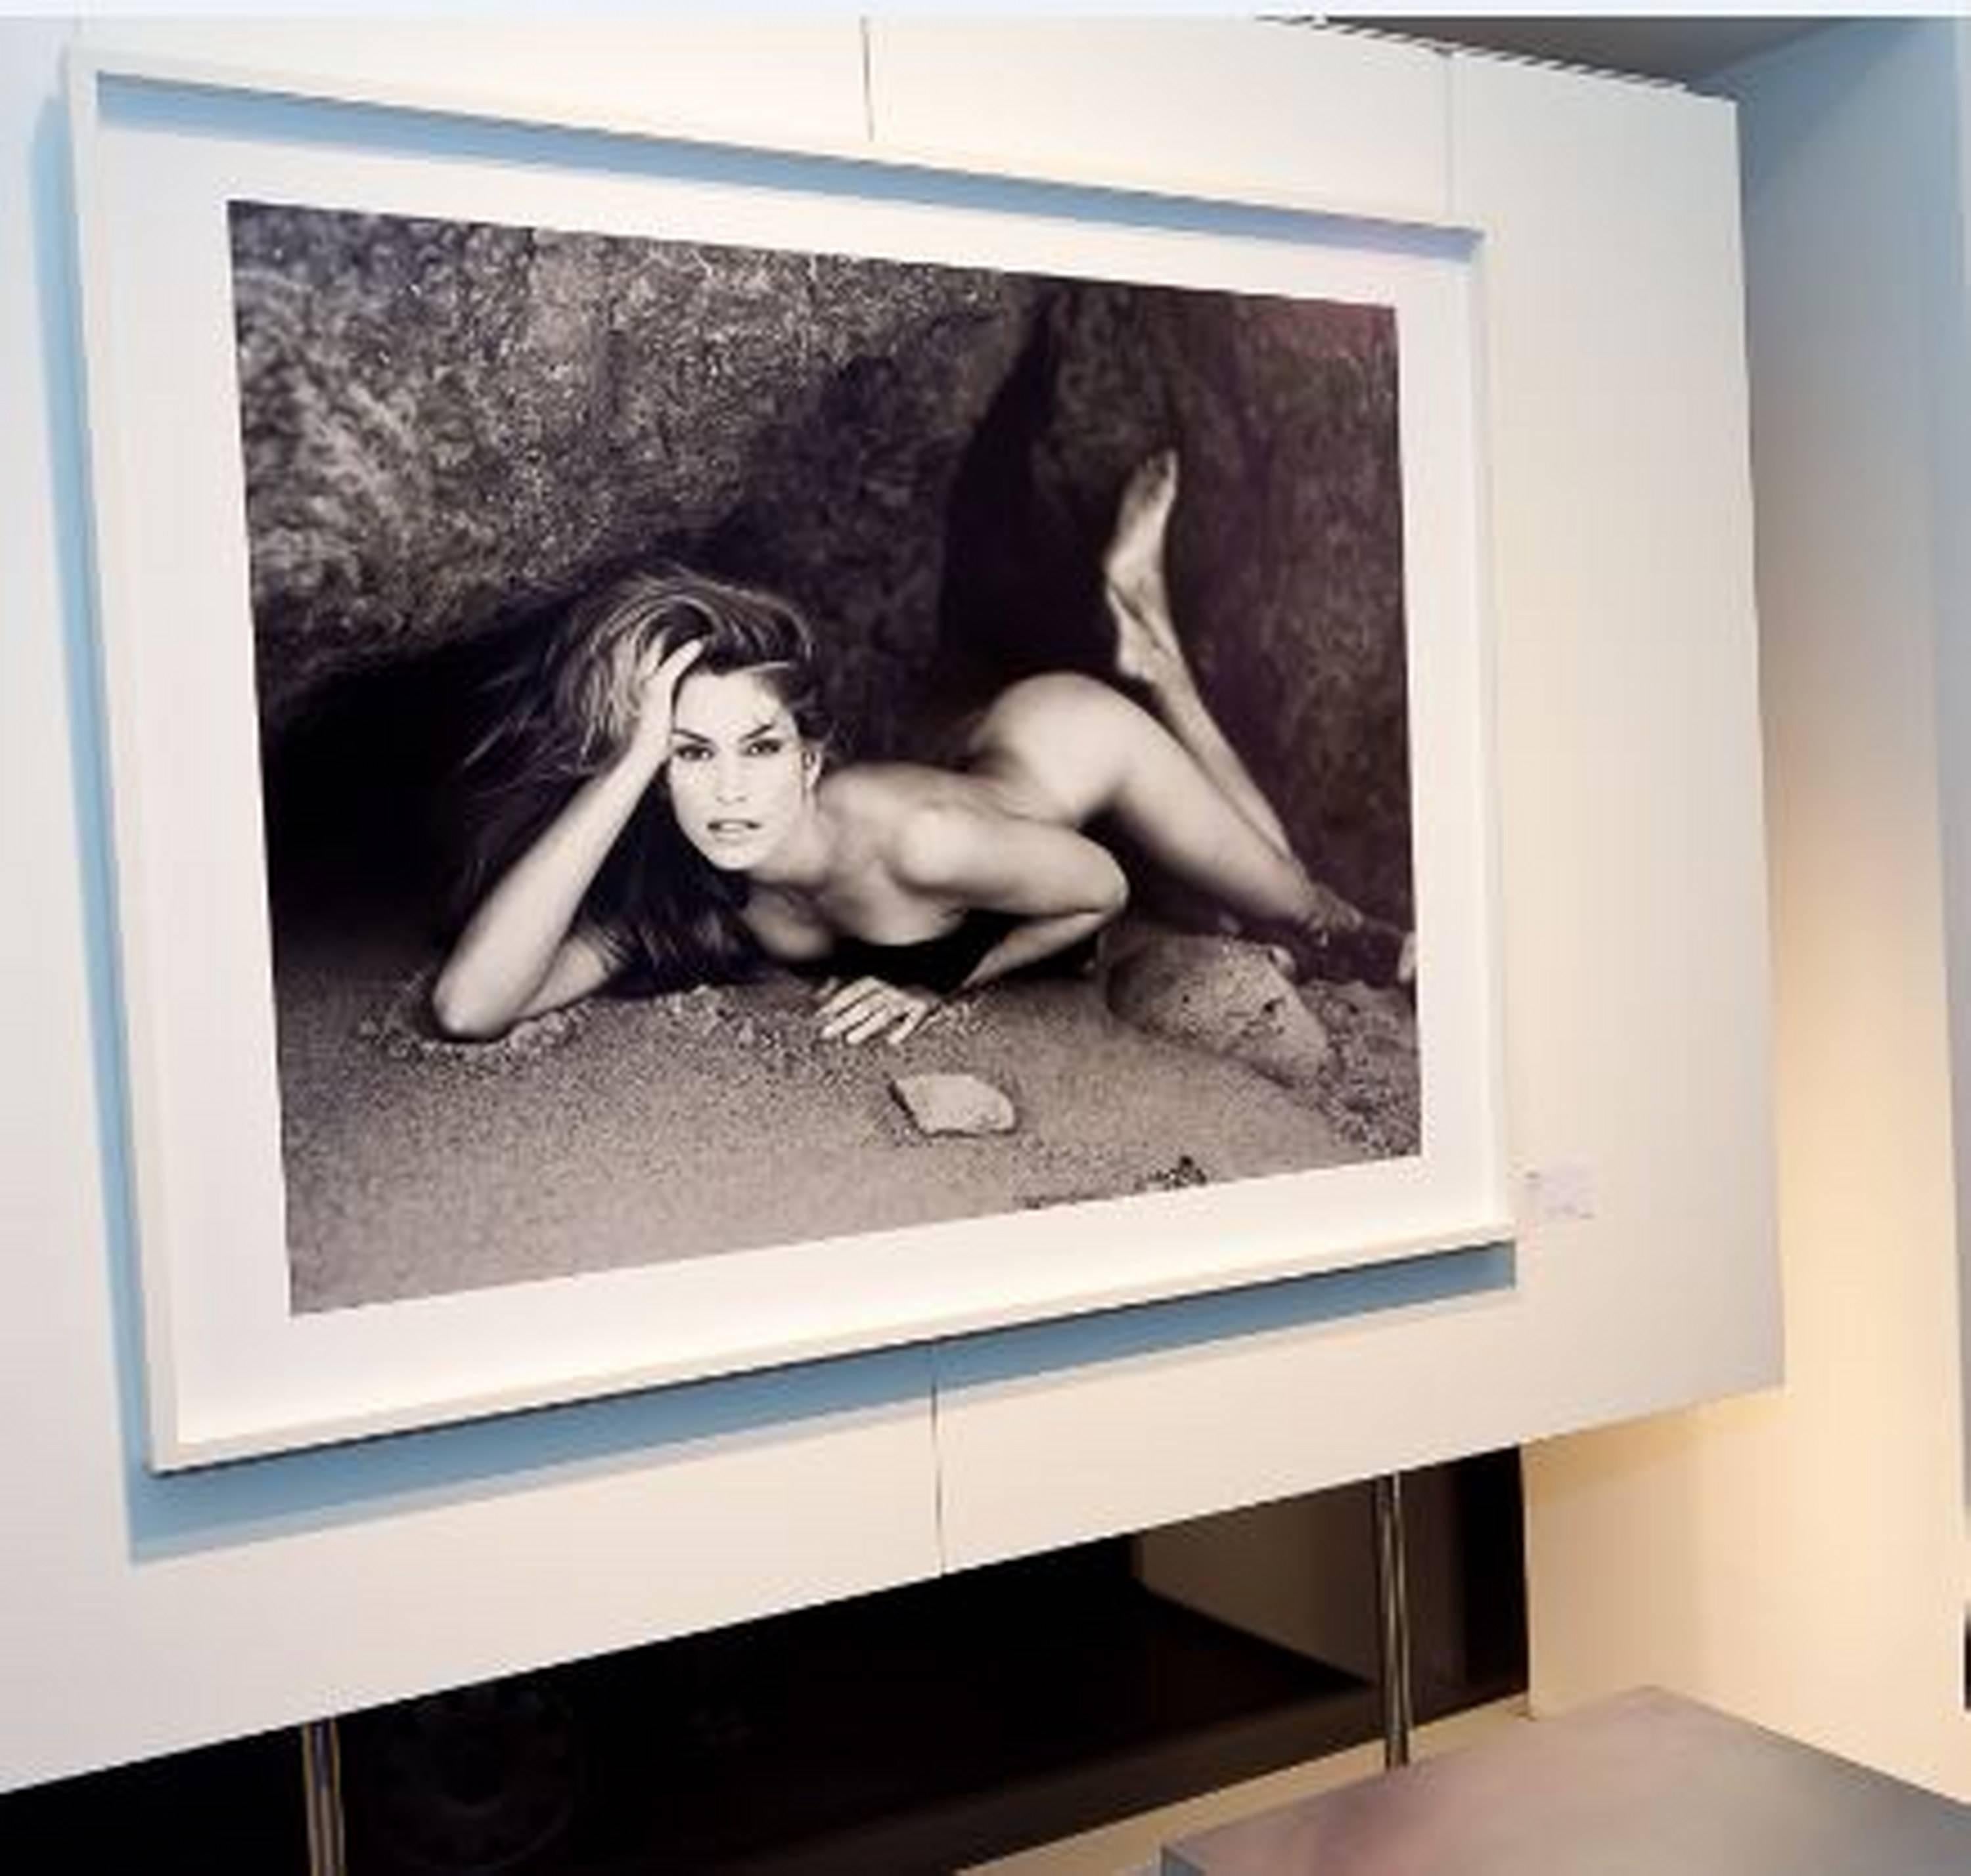 Cindy Crawford, Malibu - nude Model on the Beach, fine art photography, 1995 - Photograph by Sante D´ Orazio